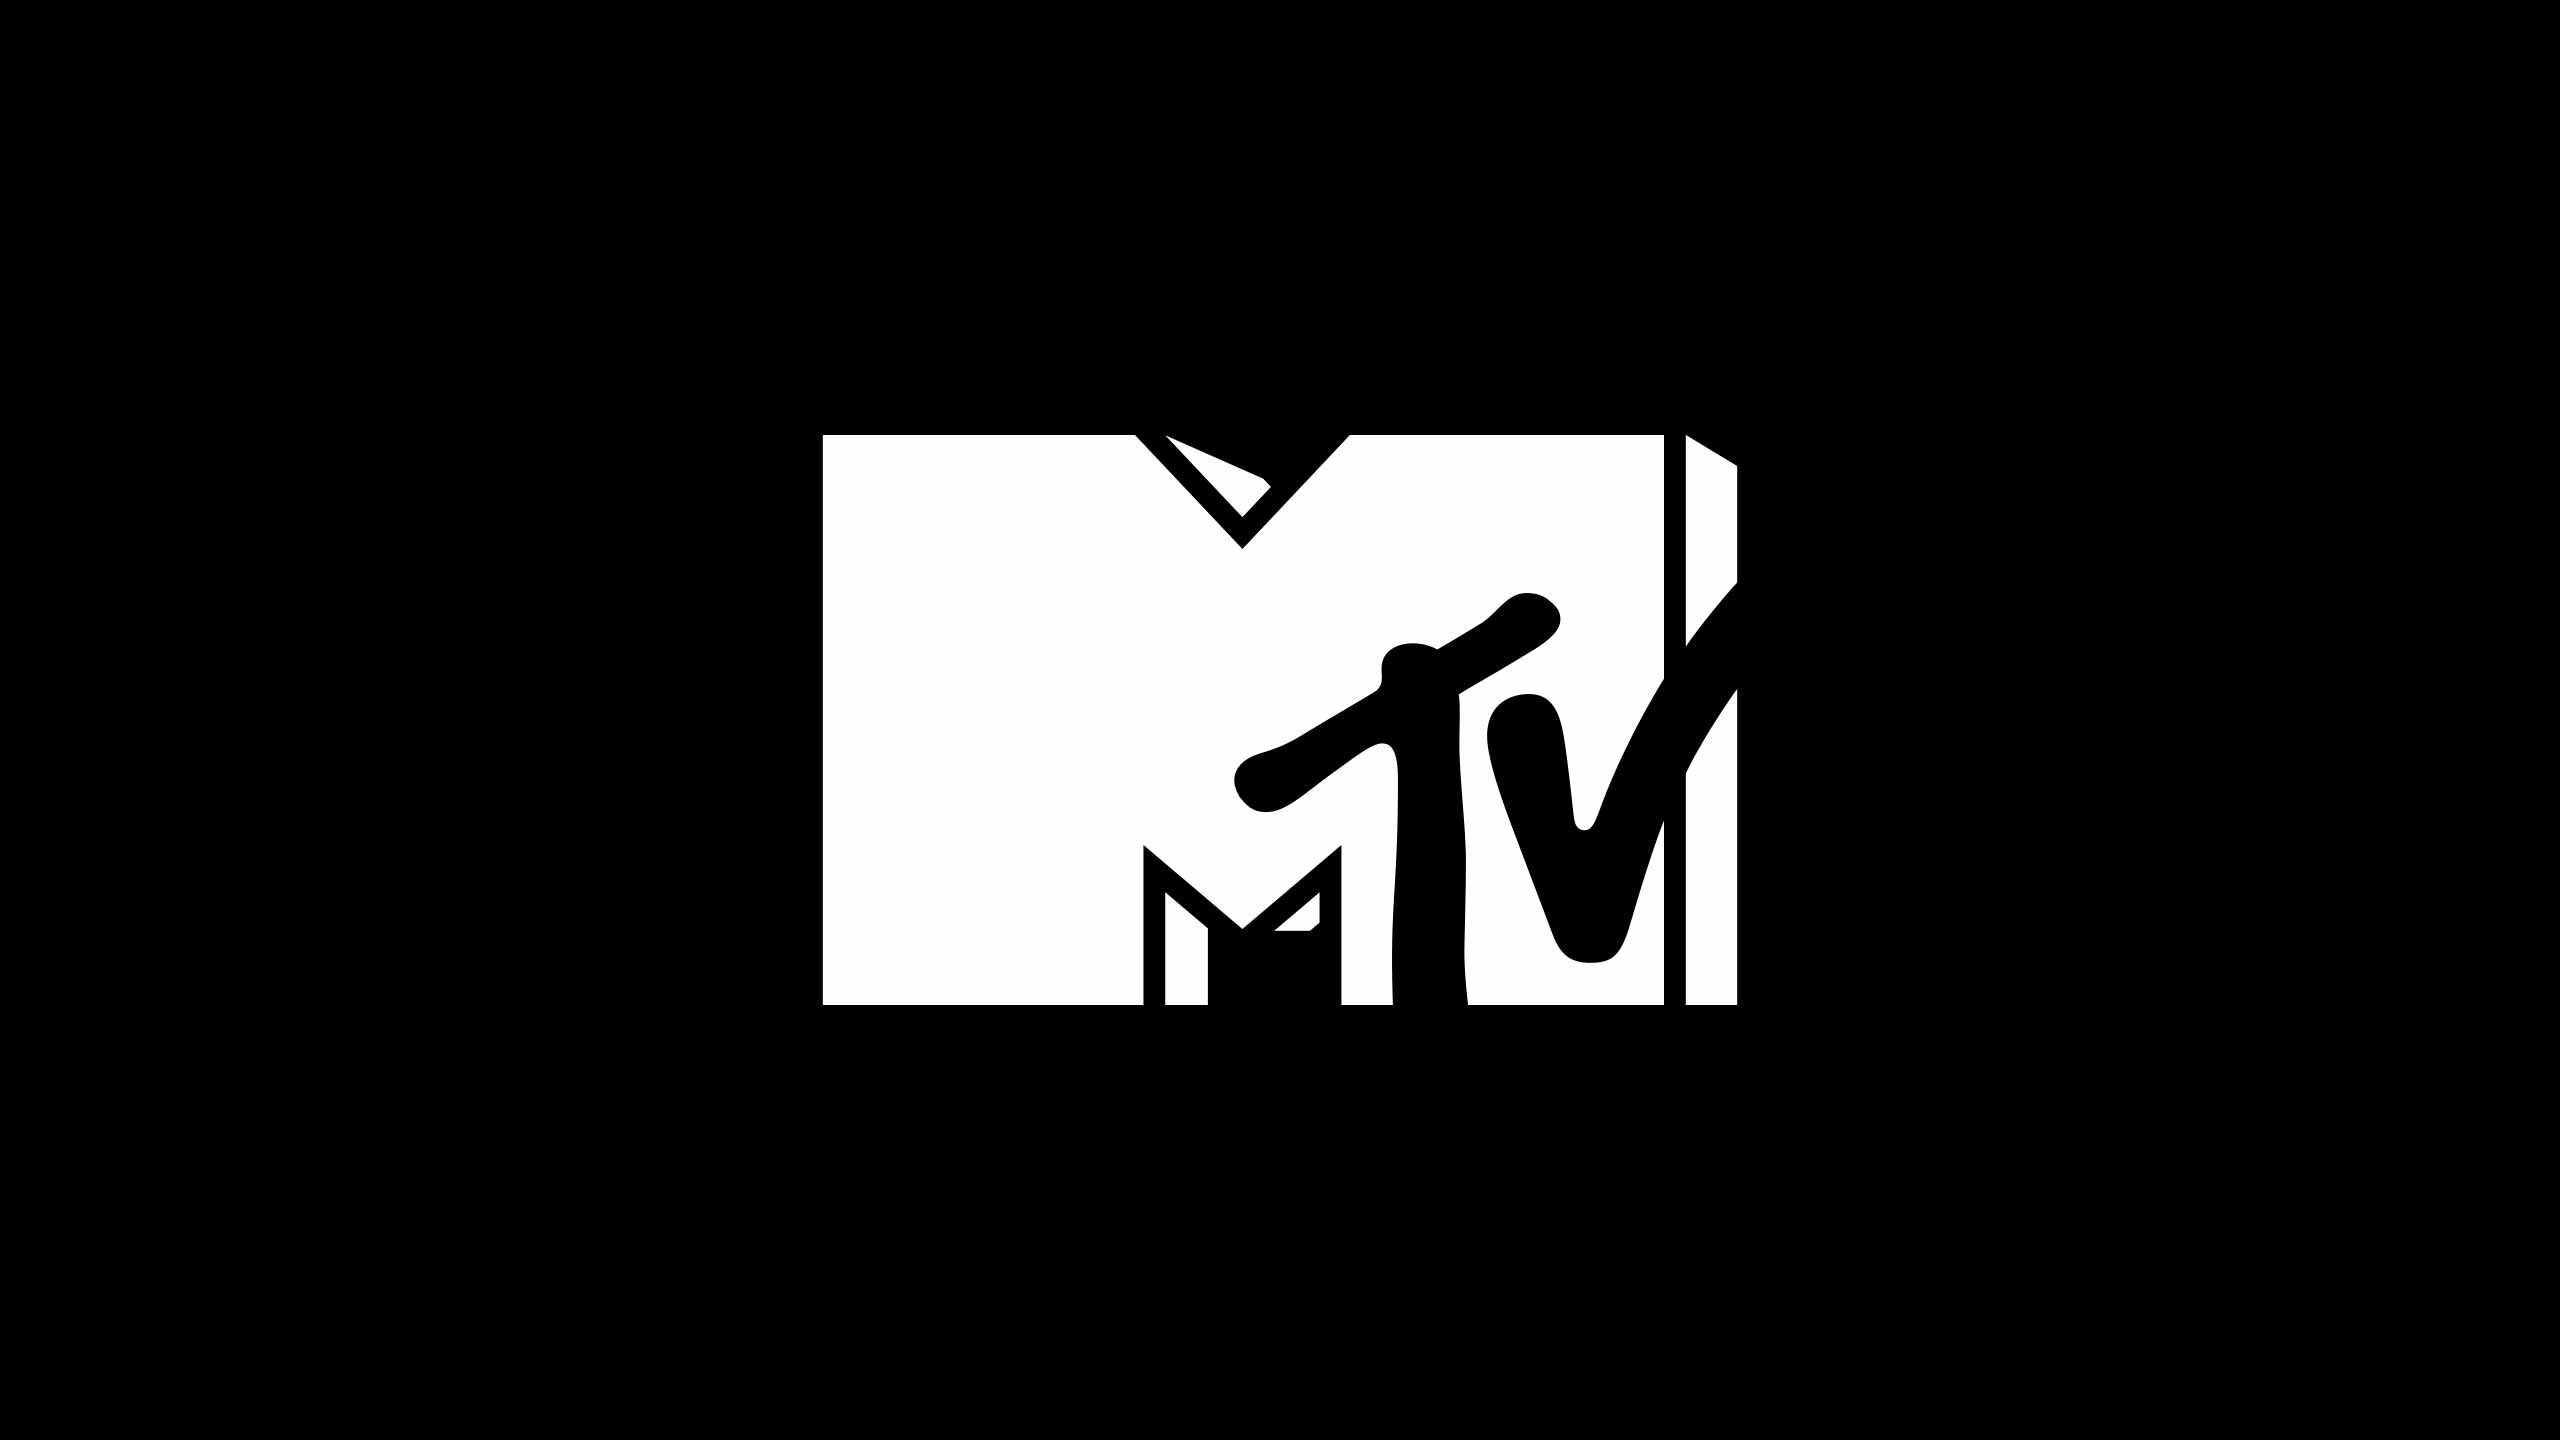 Parag Khanna hosts InnerView on MTV World